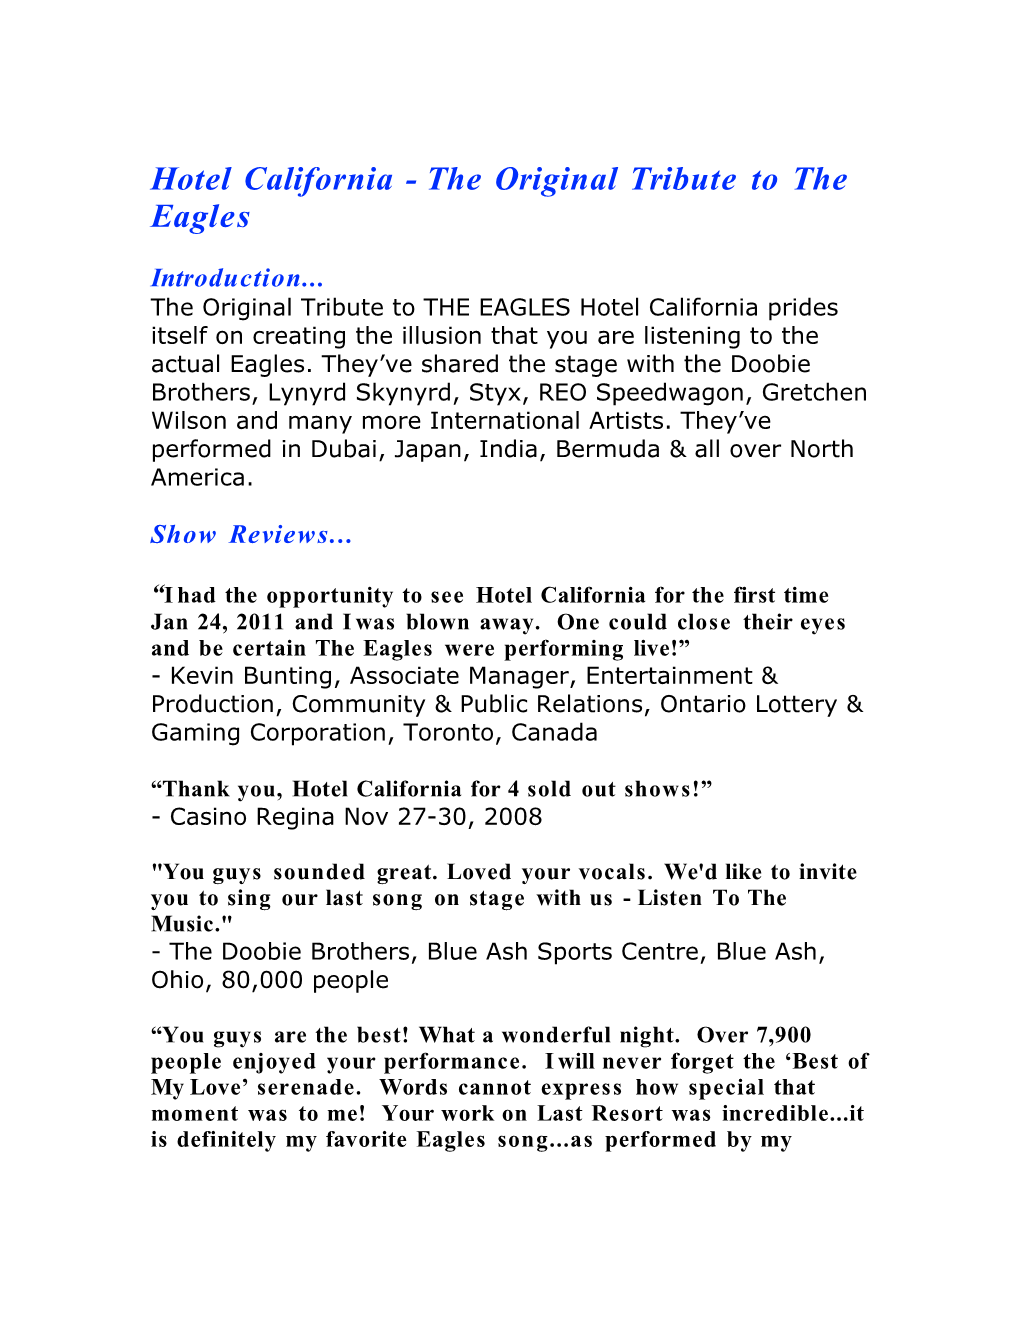 Hotel California - the Original Tribute to the Eagles